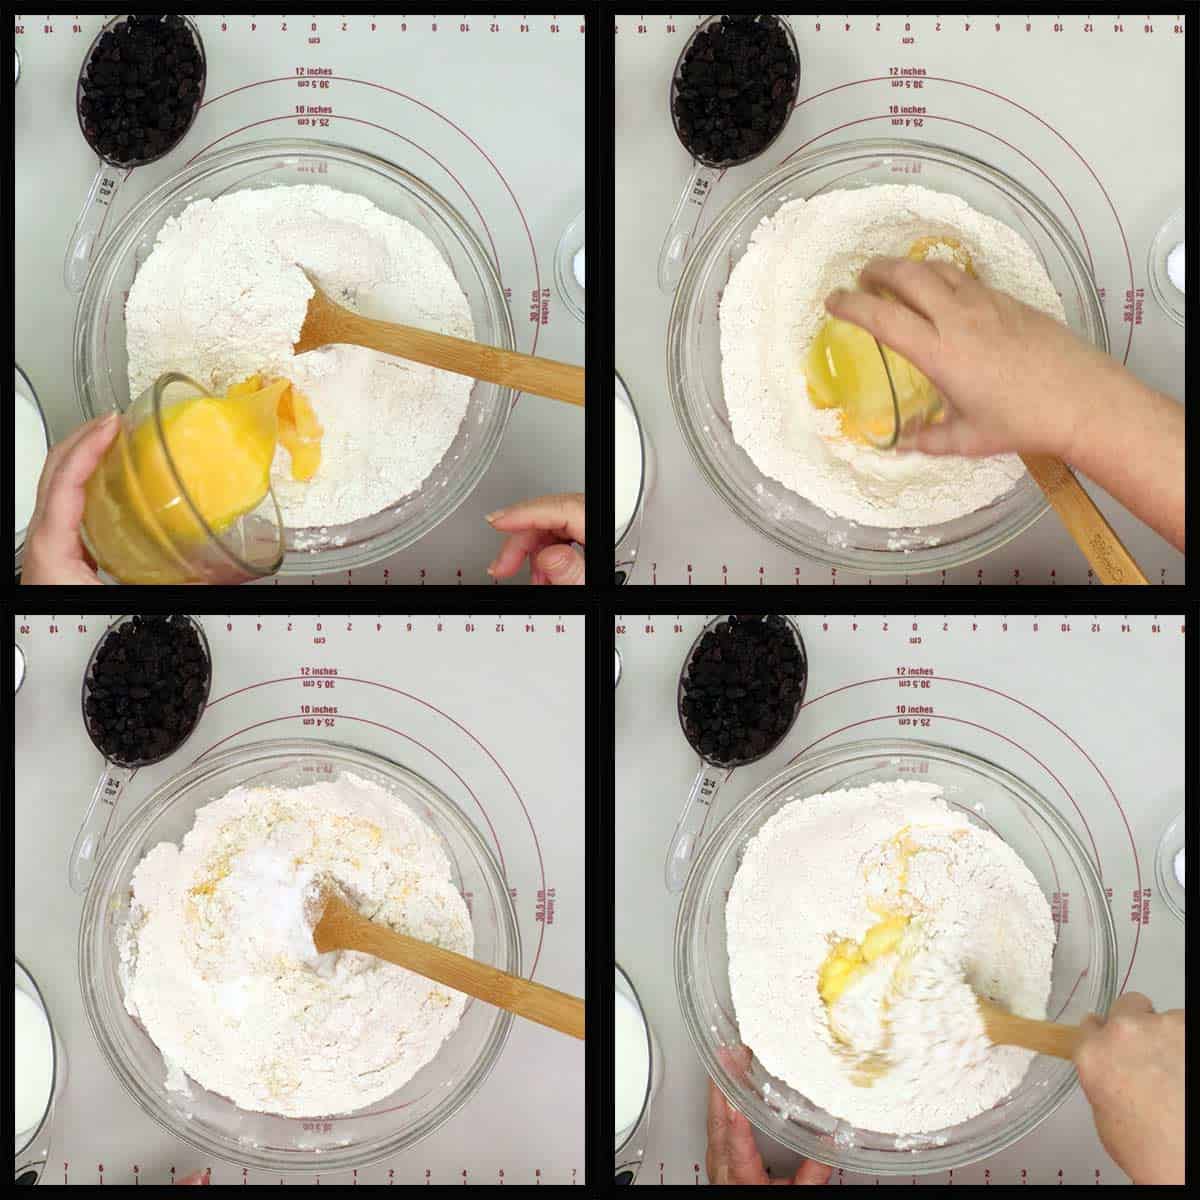 Adding eggs and butter to flour to make cinnamon raisin bread dough.